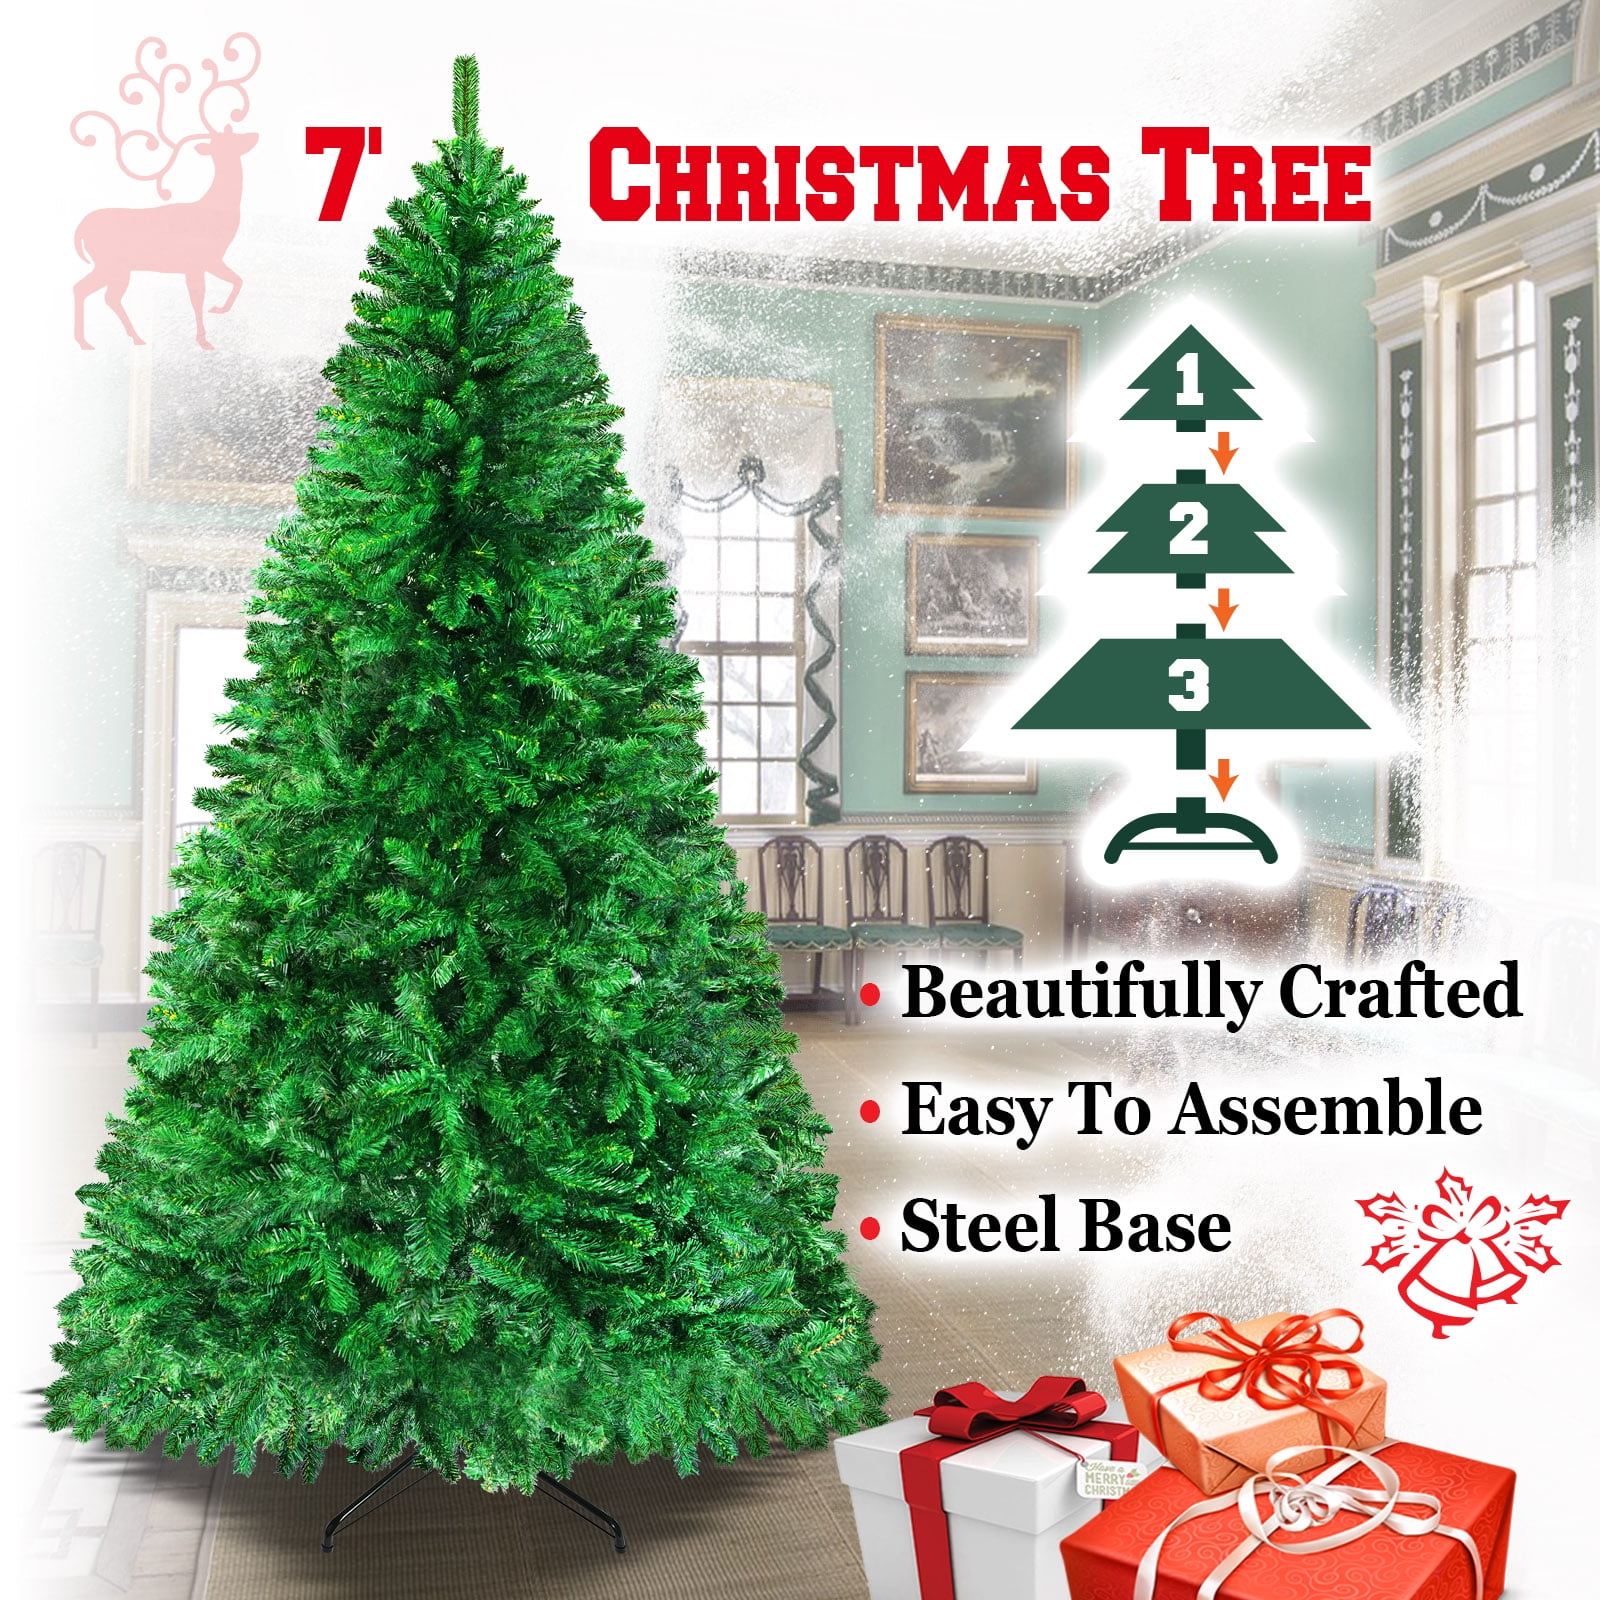 L 103 x W 16 x H 16 cm Storage Bag For Christmas Tree Green 